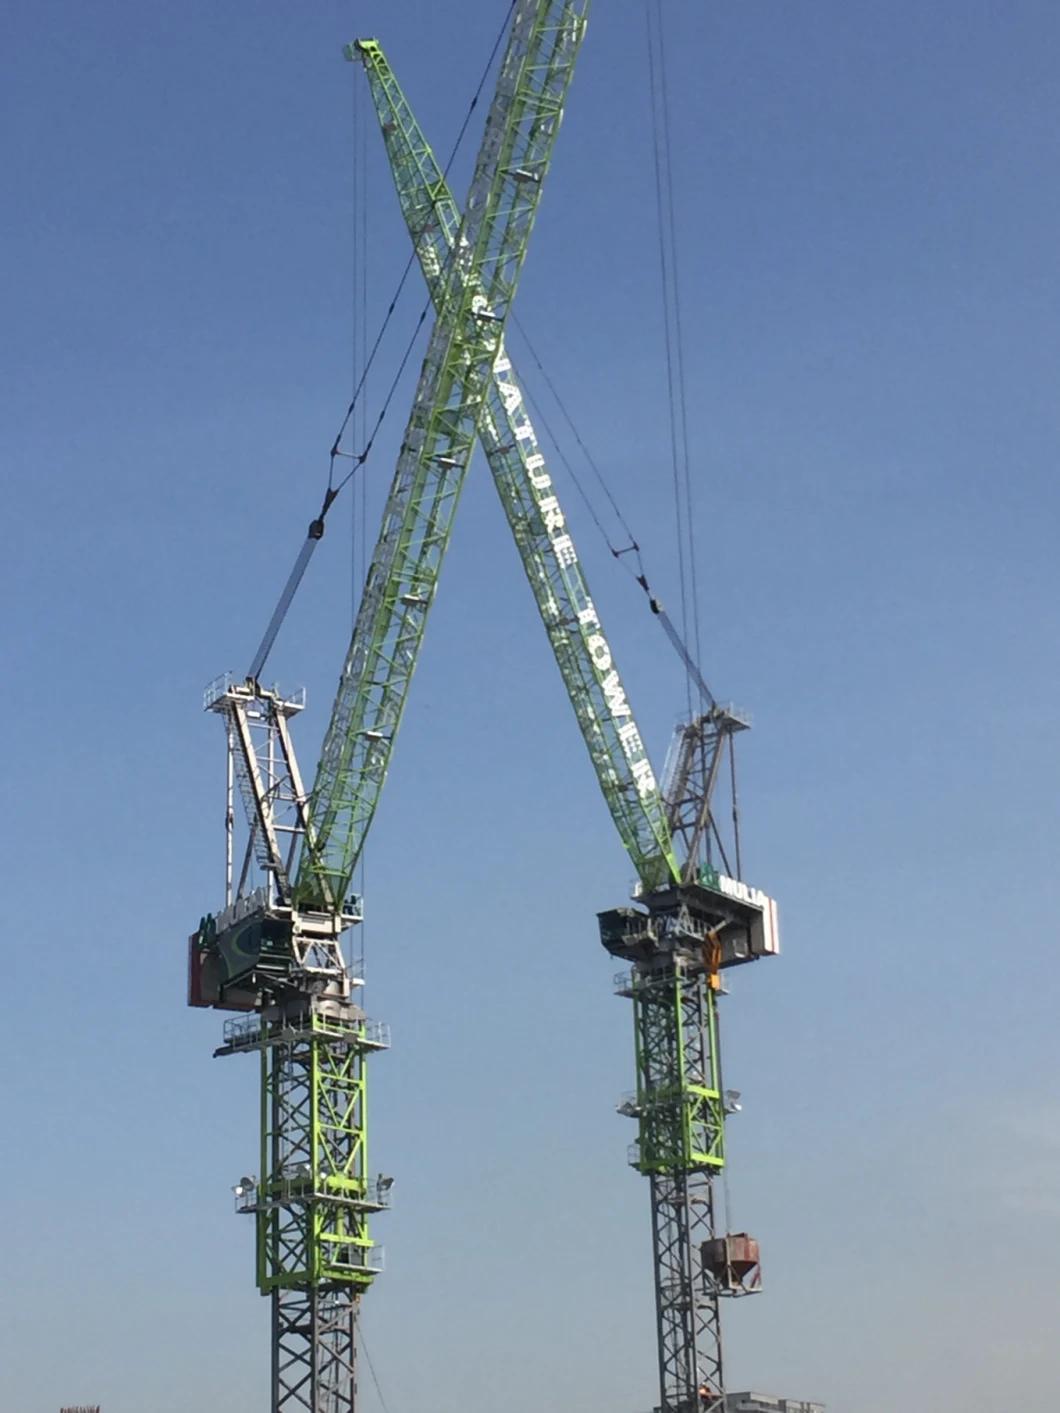 L500A-32u Zoomlion Construction Machinery Luffing Jib Tower Crane